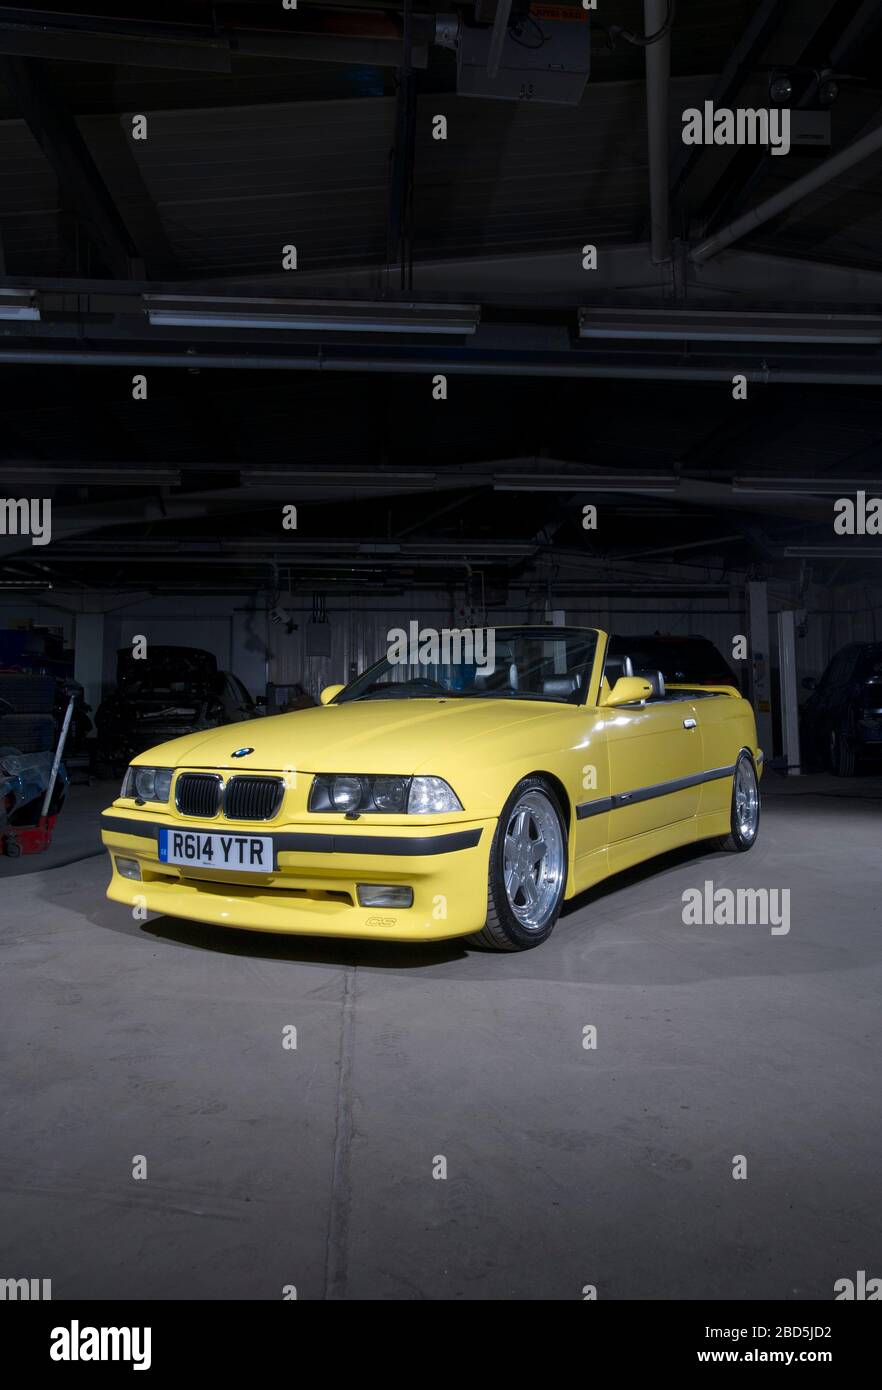 AC Schnitzer BMW E36 M3 Convertible 1990s retro car Stock Photo - Alamy